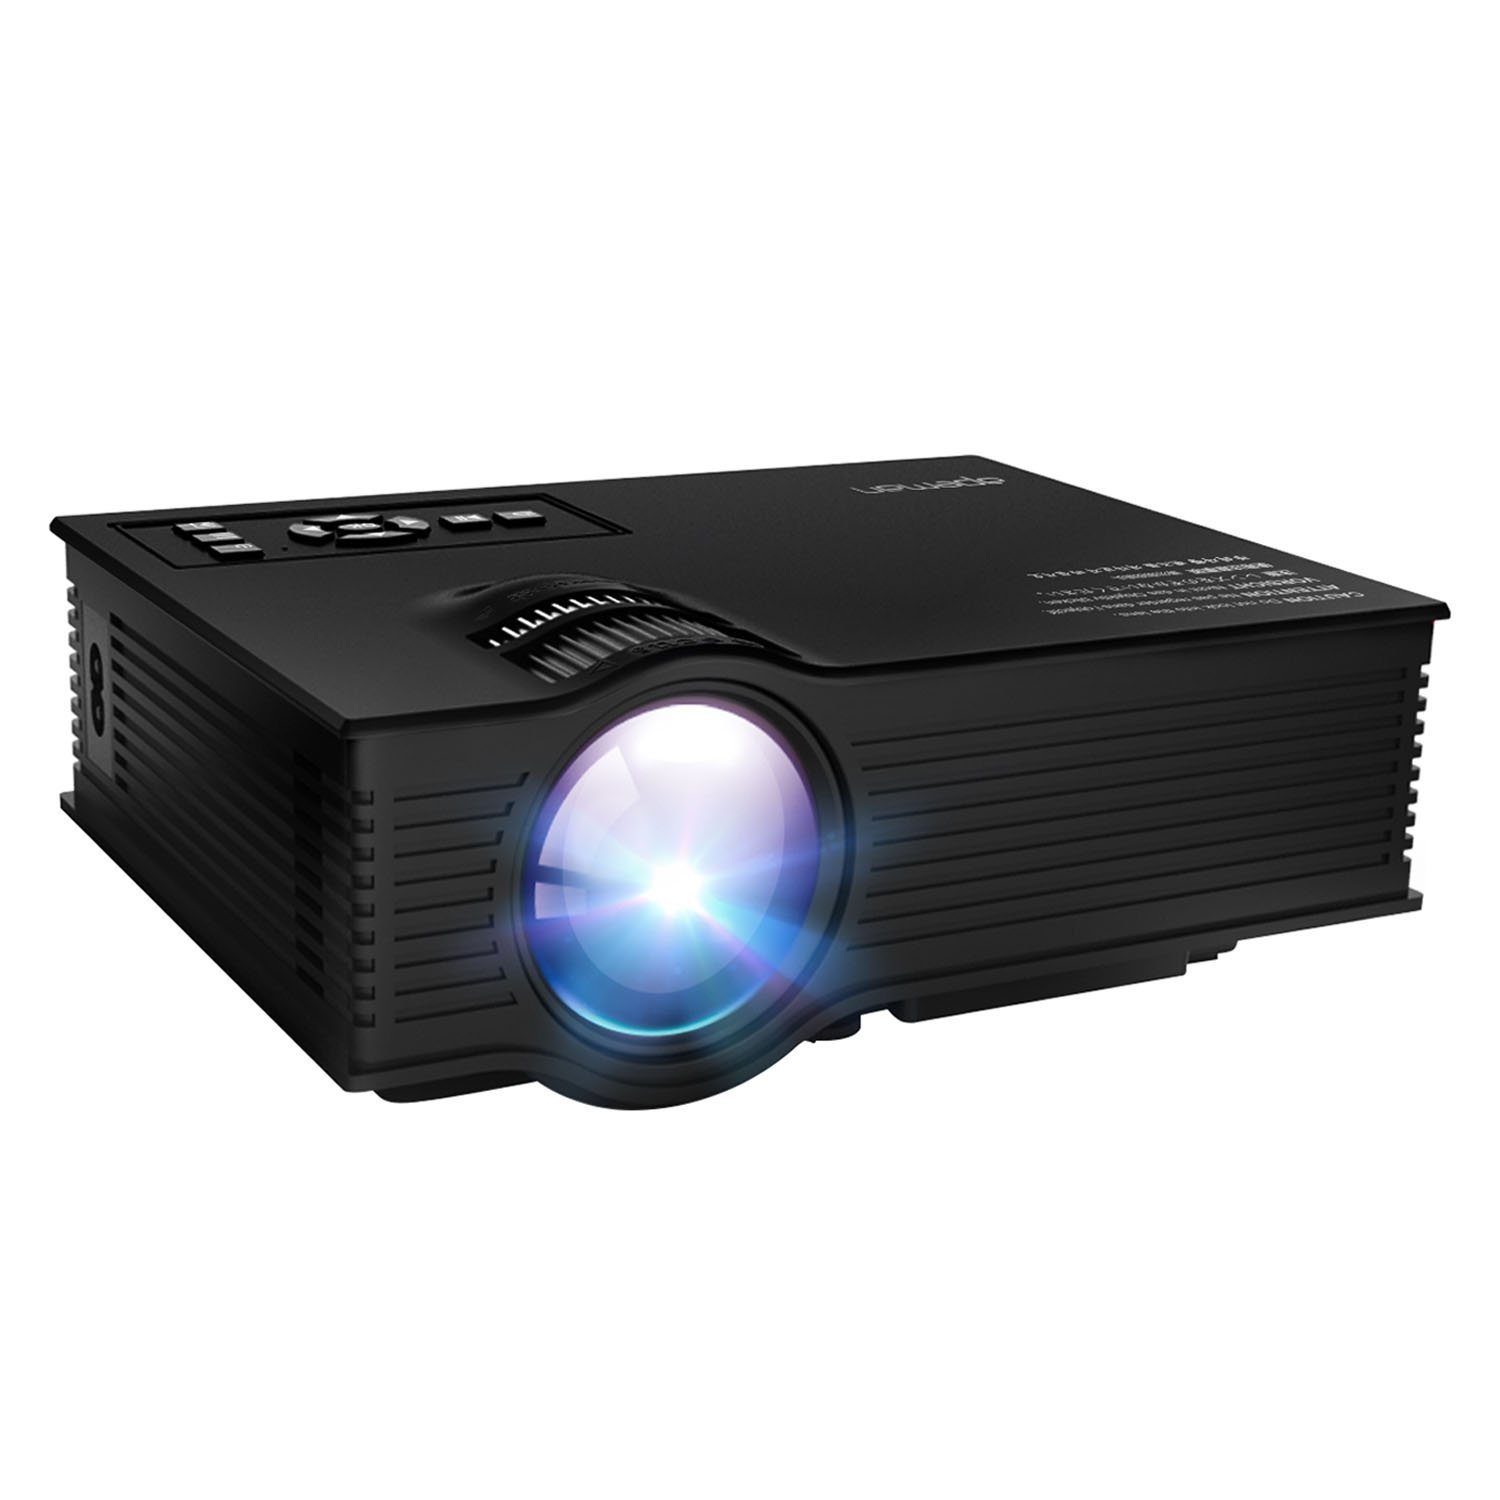 APEMAN LED Mini Projector LCD Portable Video Projector Home Theater Projector Support 1080P with HDMI/USB/SD Card/AV Input